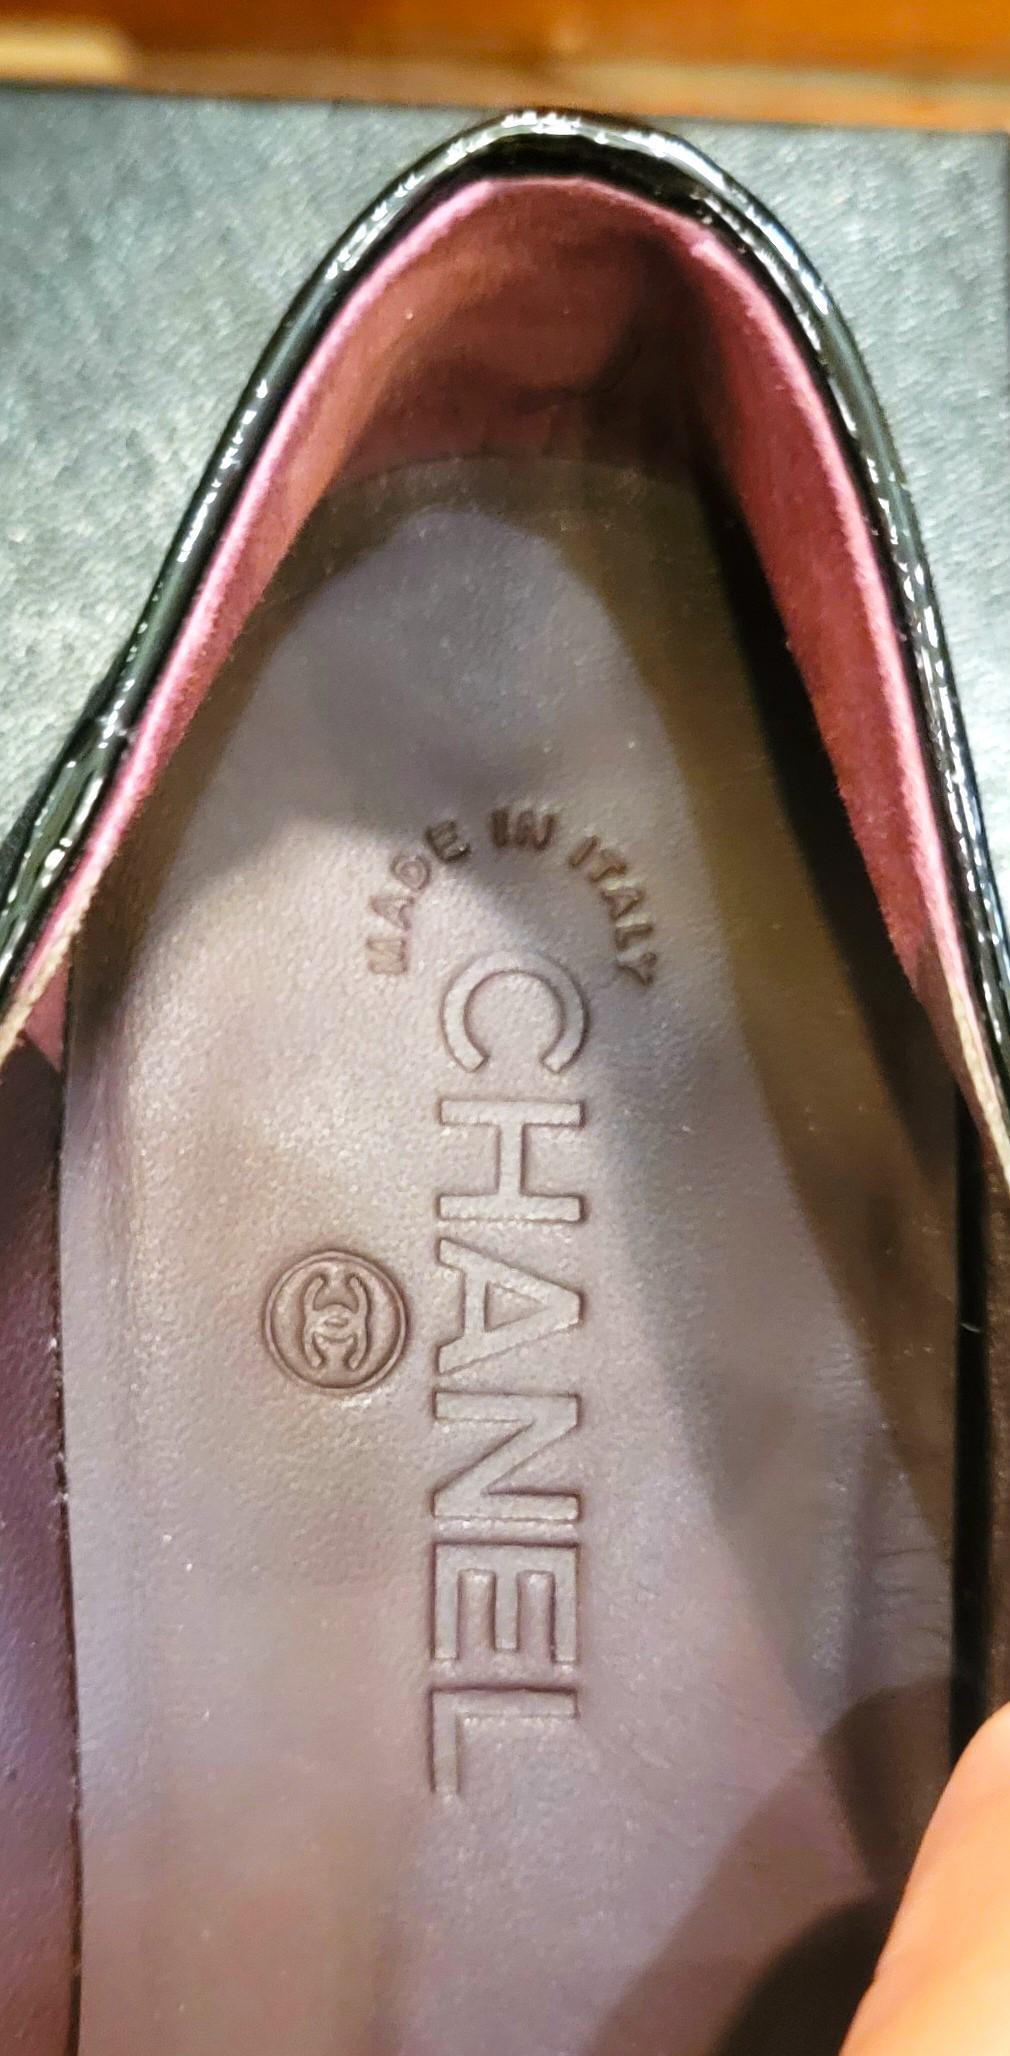 Authentic Brand New Chanel Black Balerina Flats Satin Leather Size 39 2